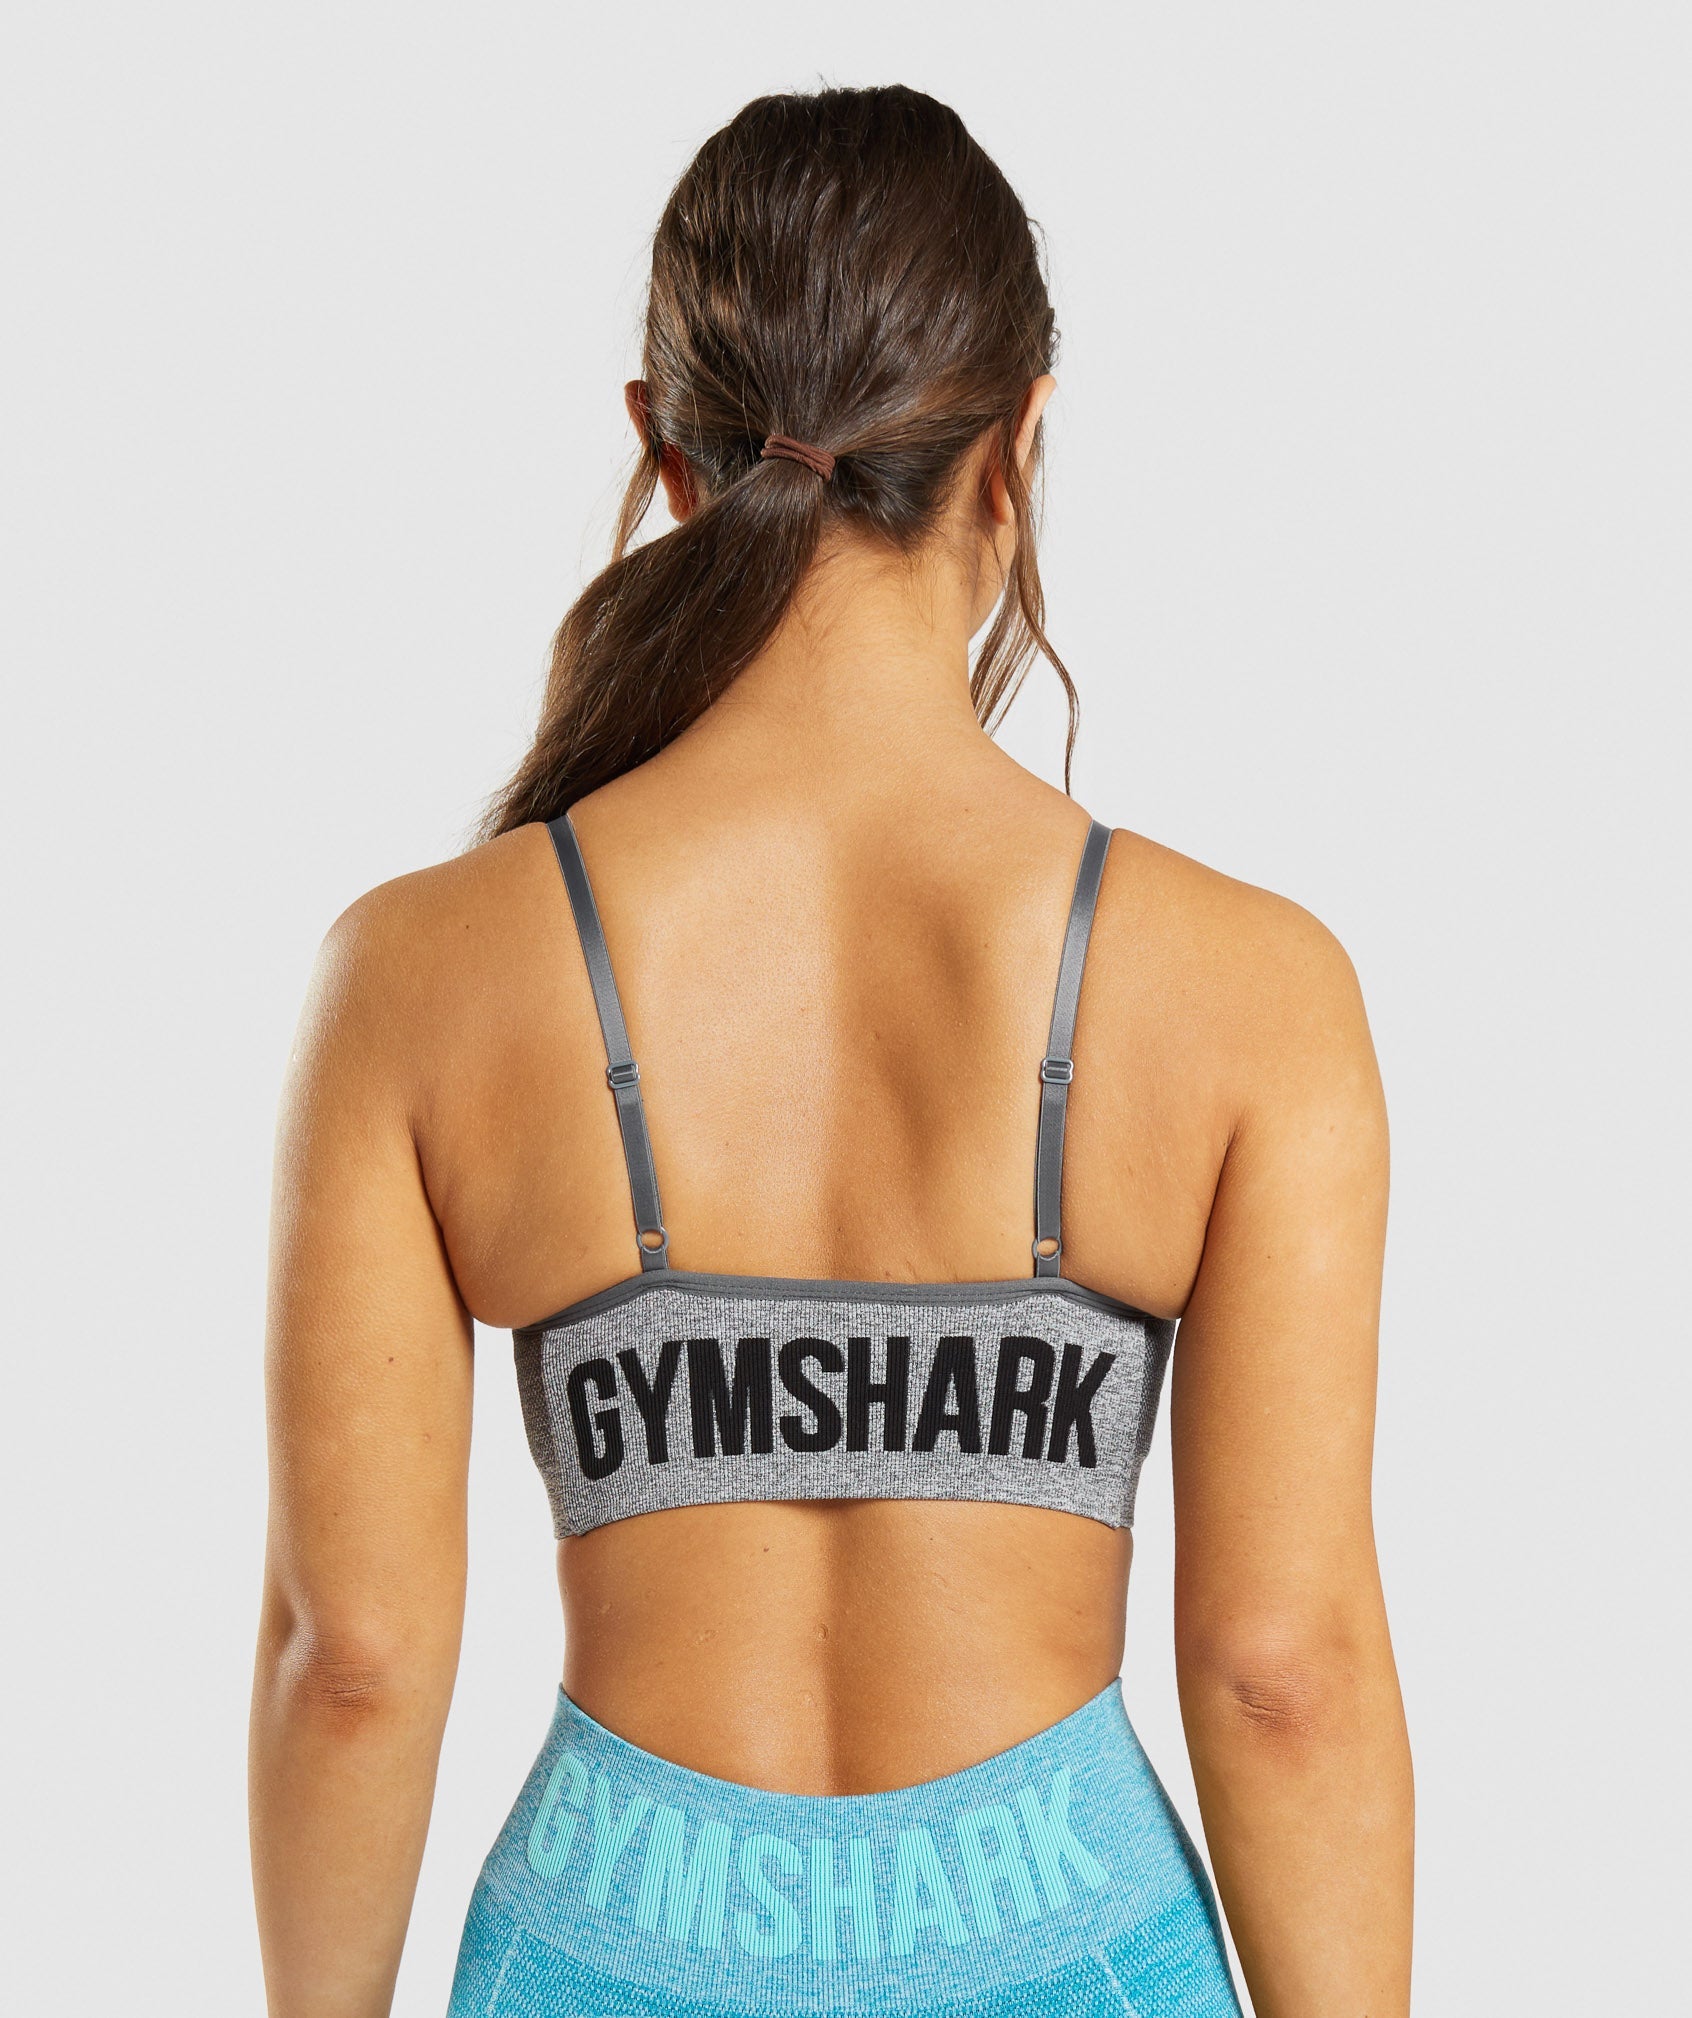 Gymshark Flex Sports Bra - Intimates & Sleepwear